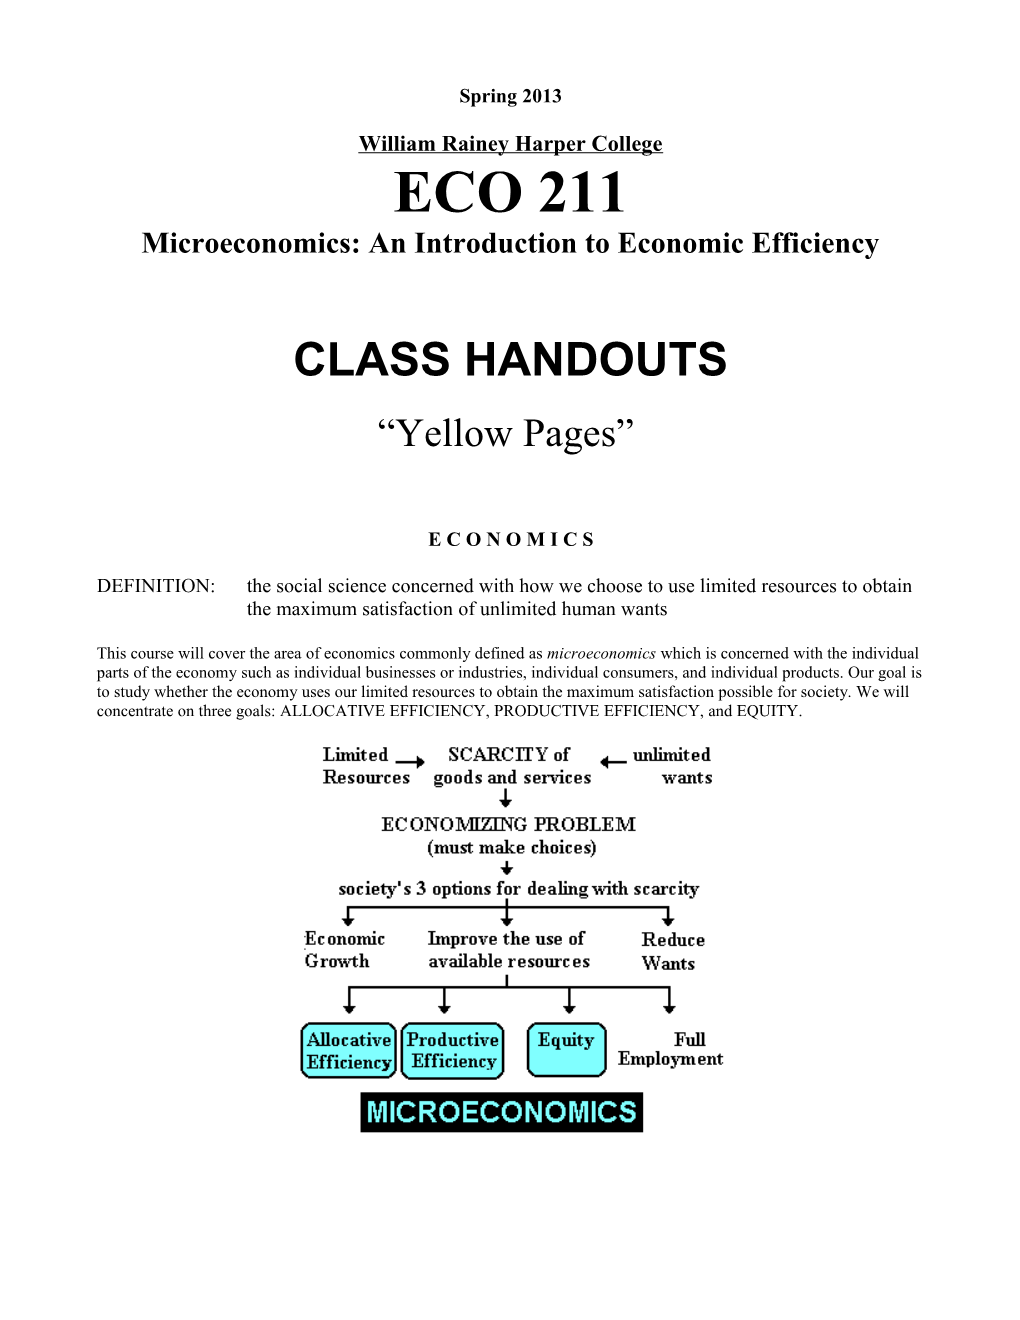 William Rainey Harper College ECO 211 Microeconomics: an Introduction to Economic Efficiency